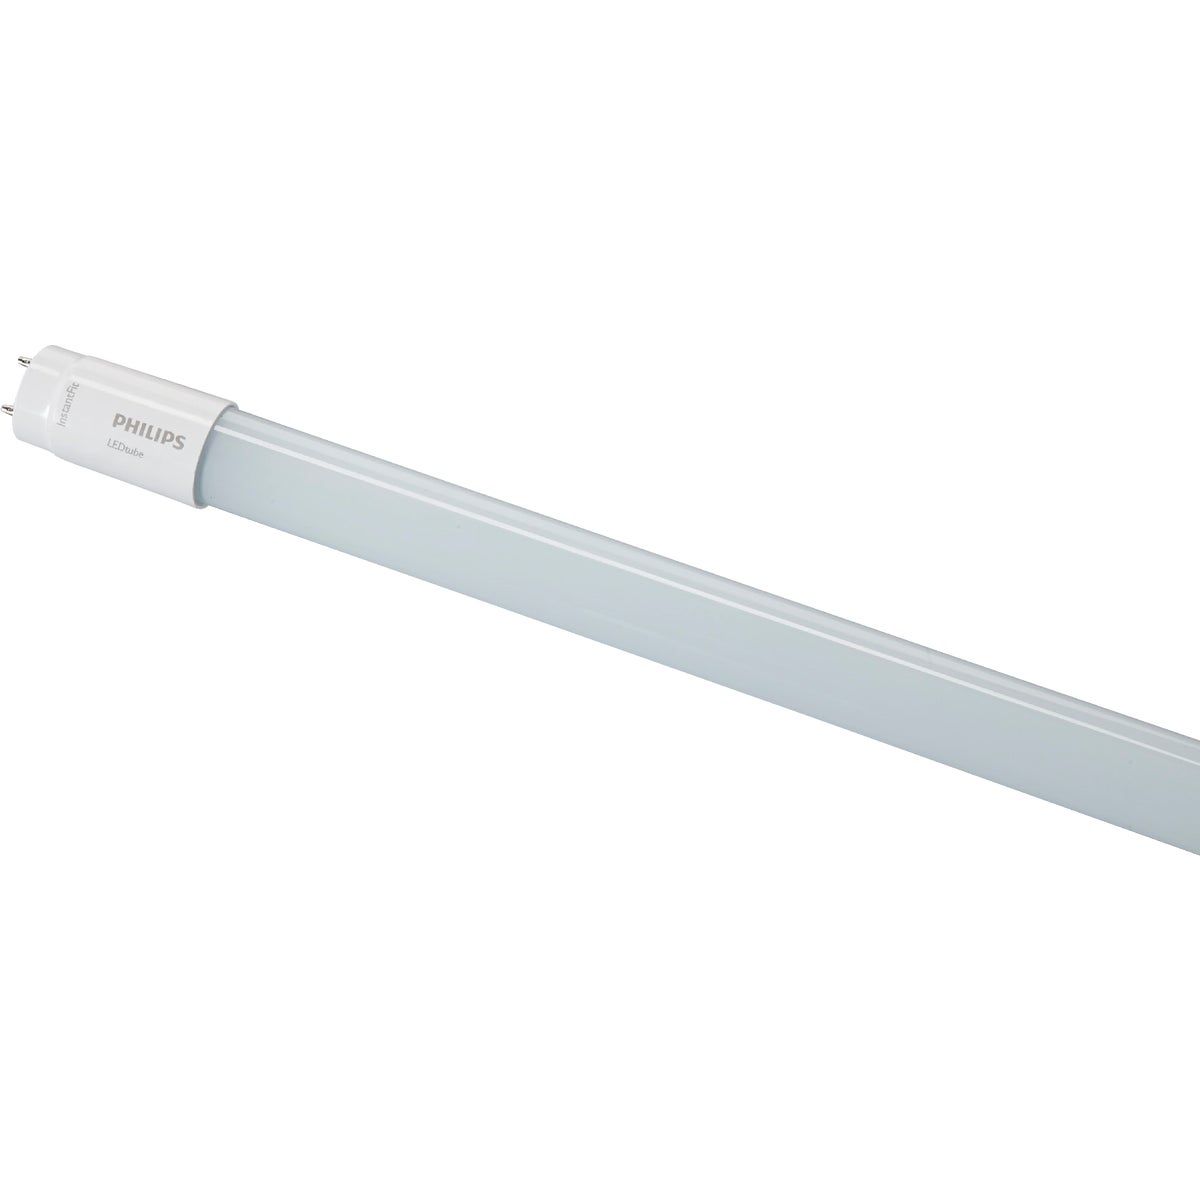 Item 501714, InstantFit T8 LED (light emitting diode) tube with bi-pin base.